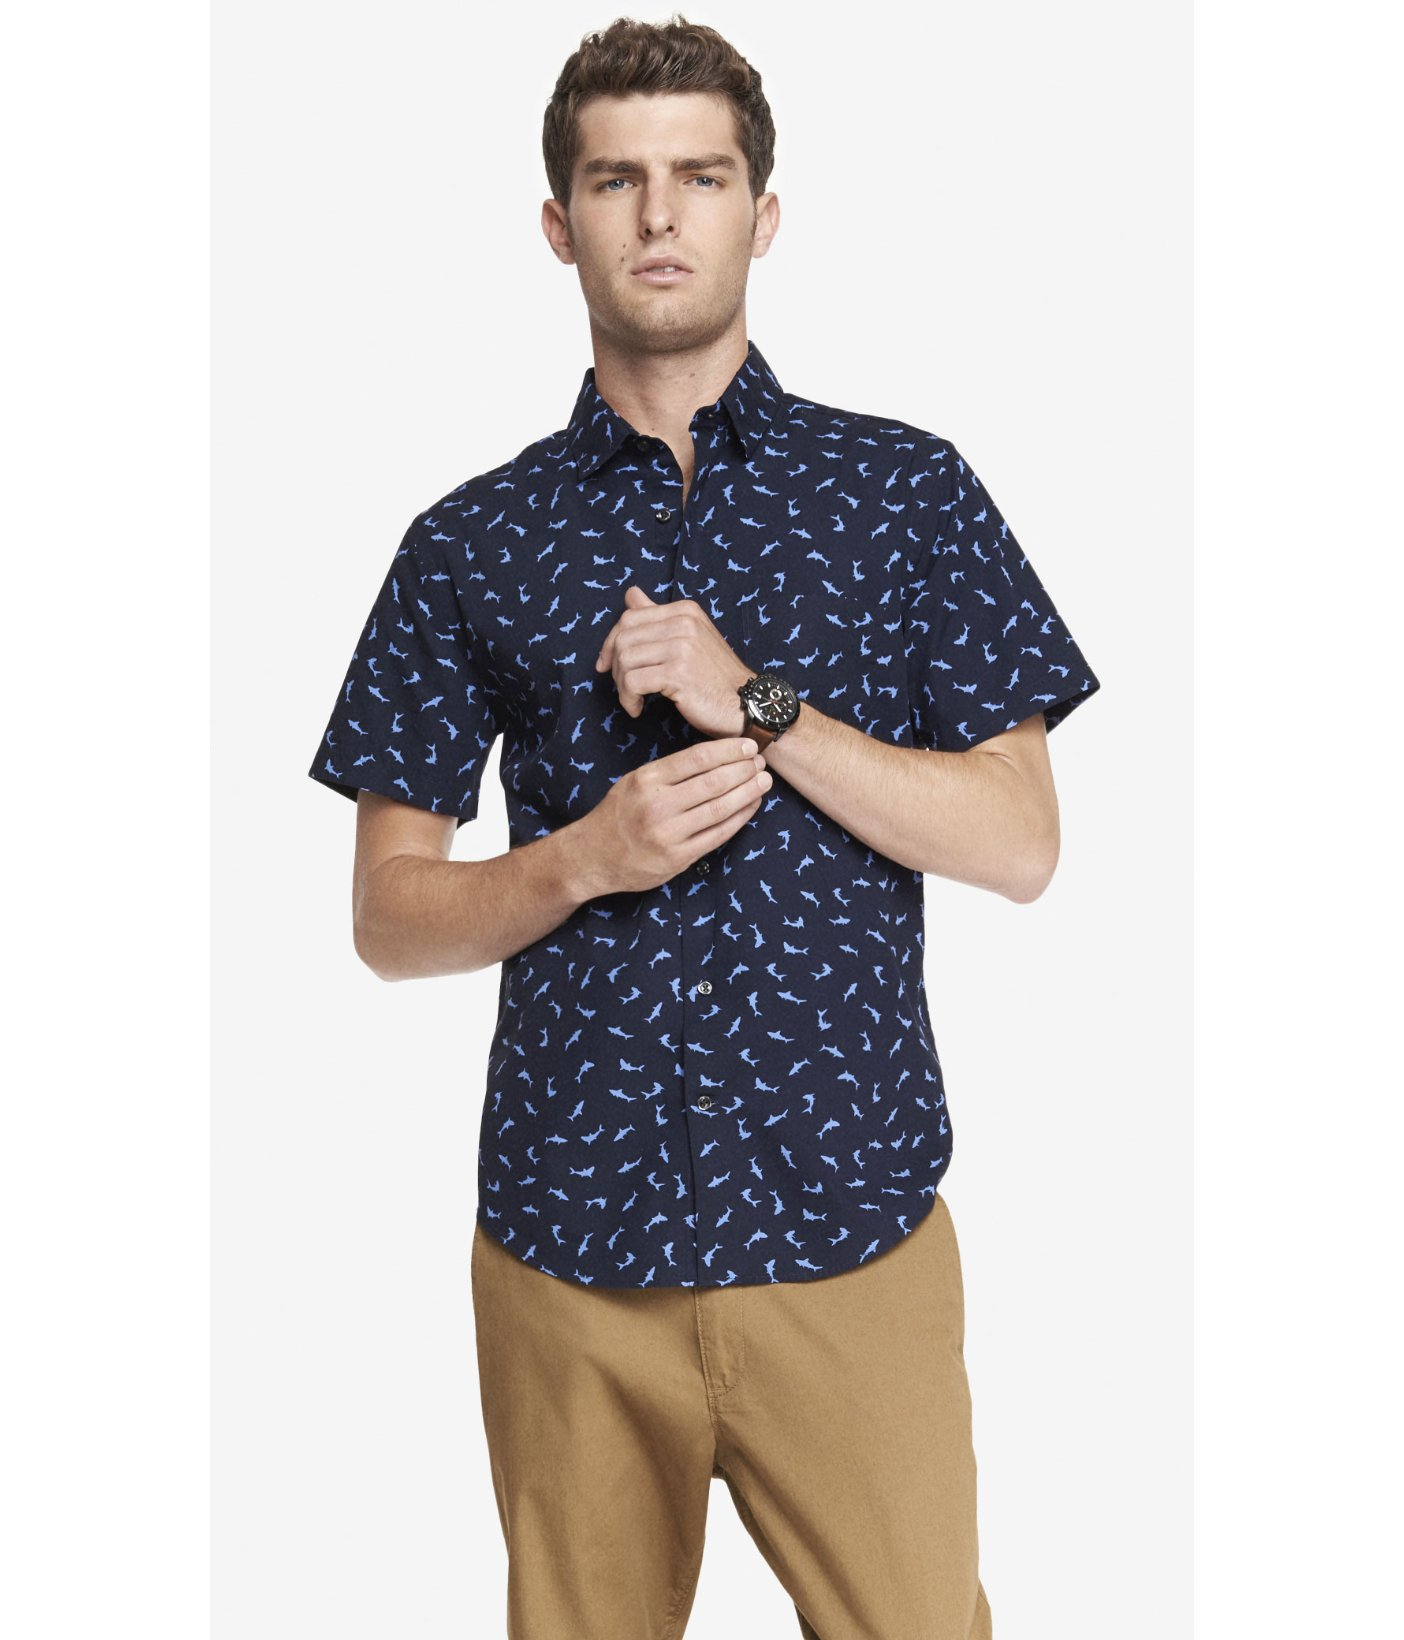 Lyst - Express Fitted Short Sleeve Shark Print Shirt in Blue for Men